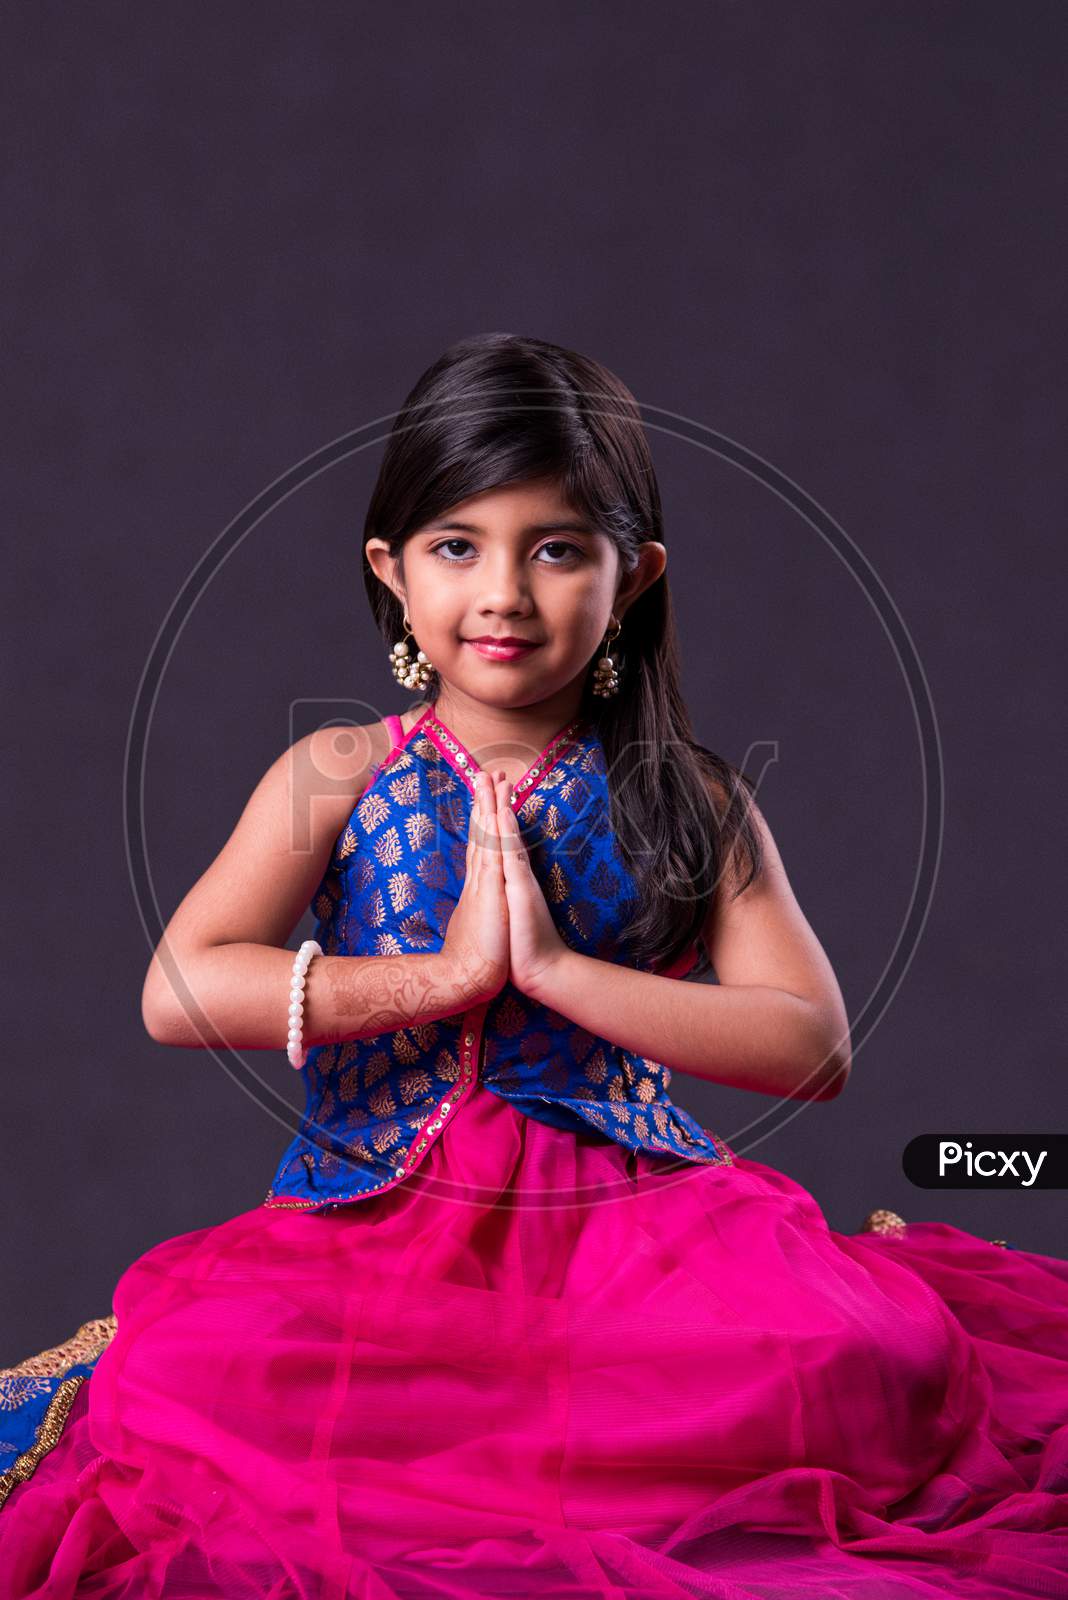 Small girl in namaskara or Prayer pose with both hands folded